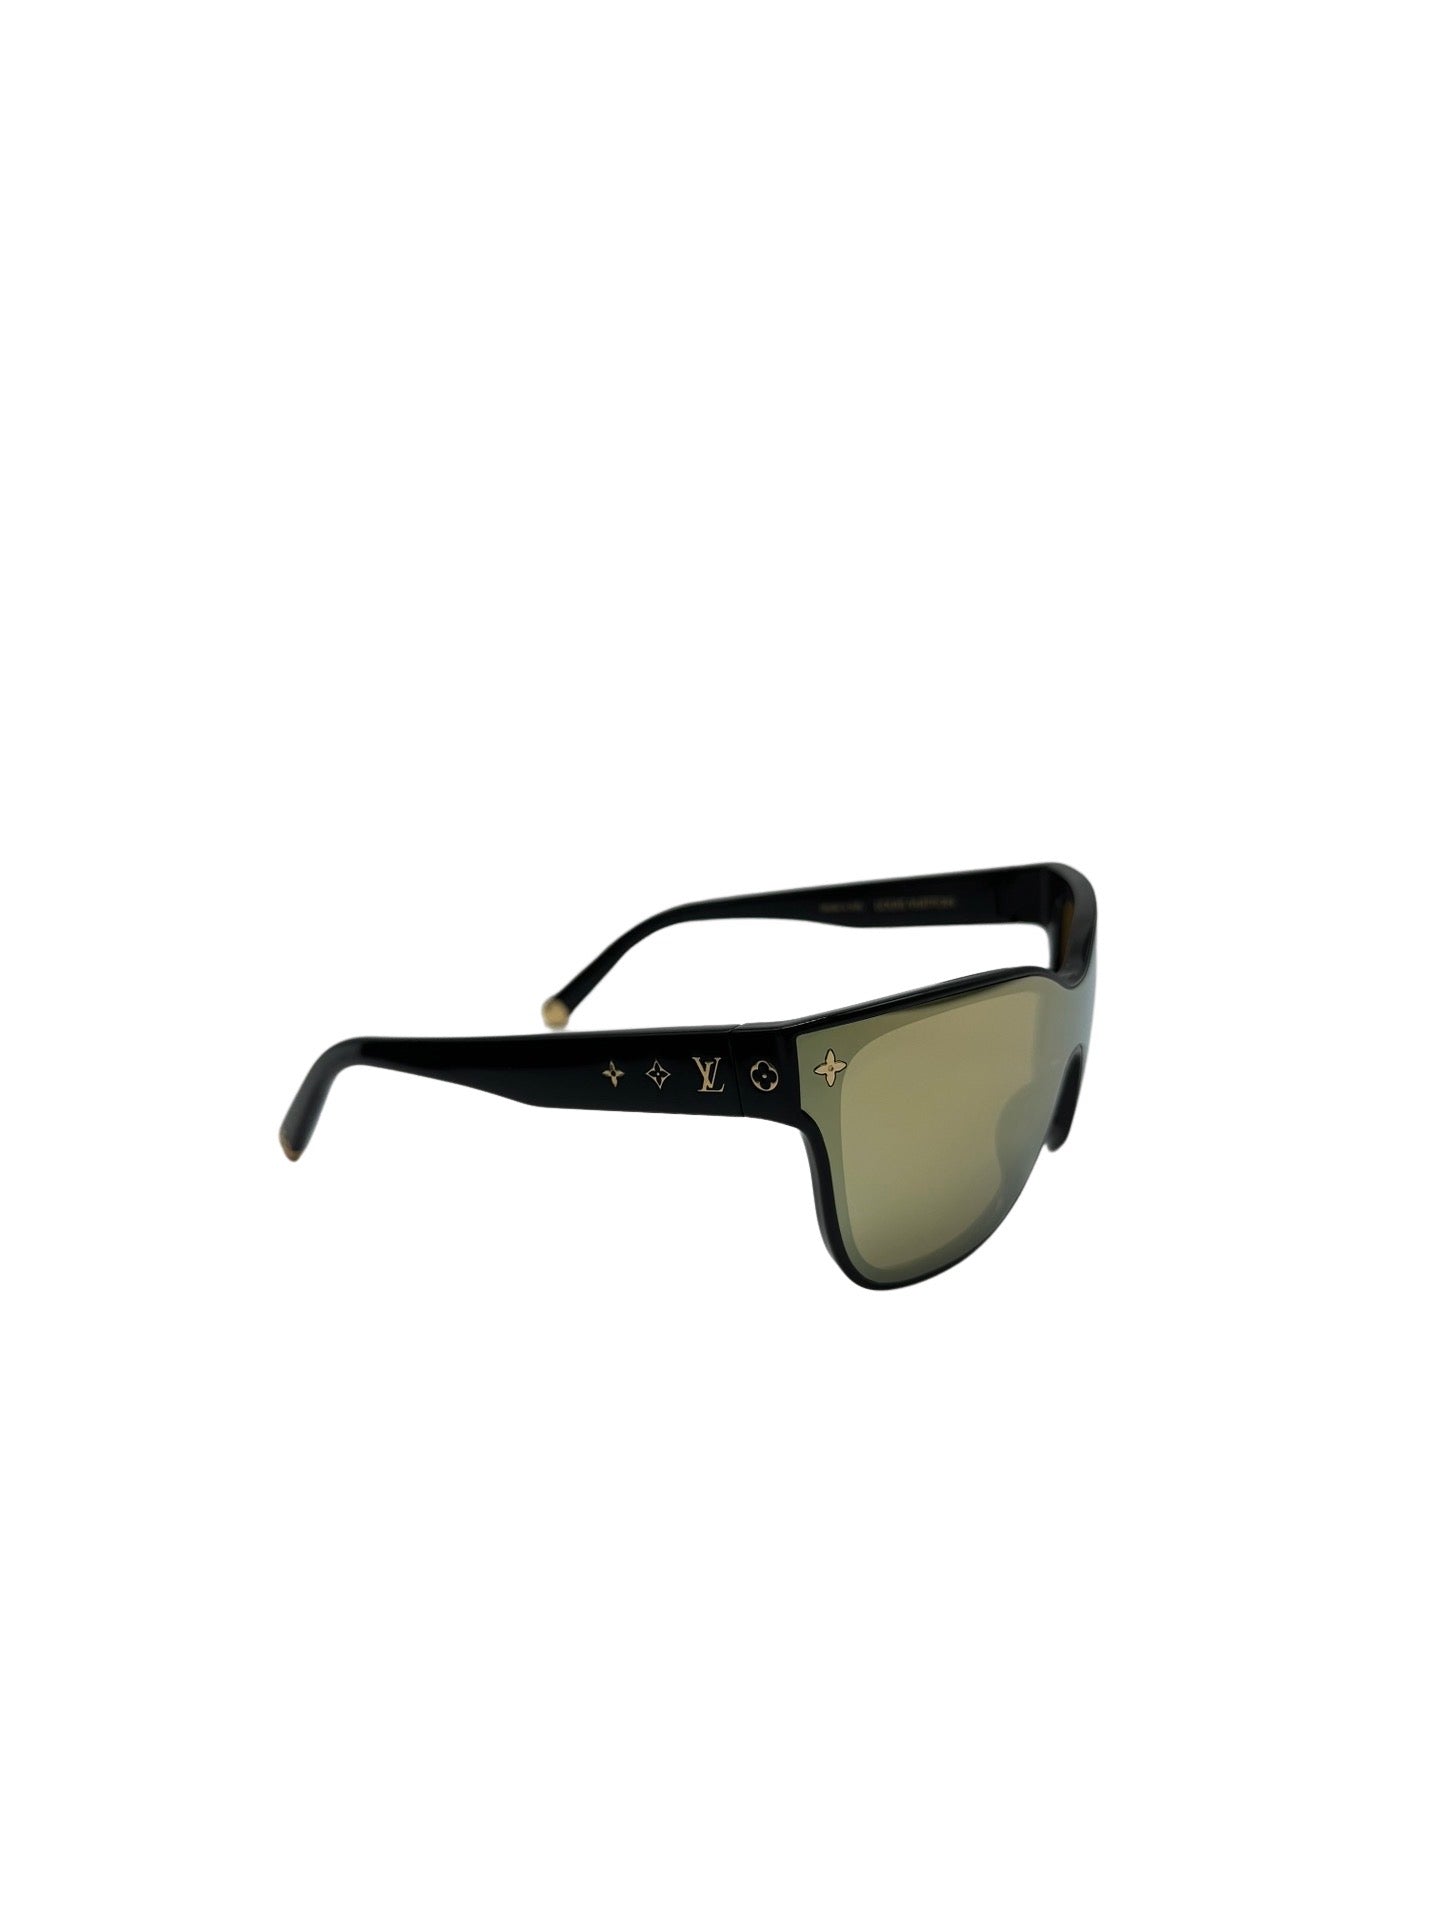 Louis Vuitton 'LV First' Square Sunglasses - Brown Sunglasses